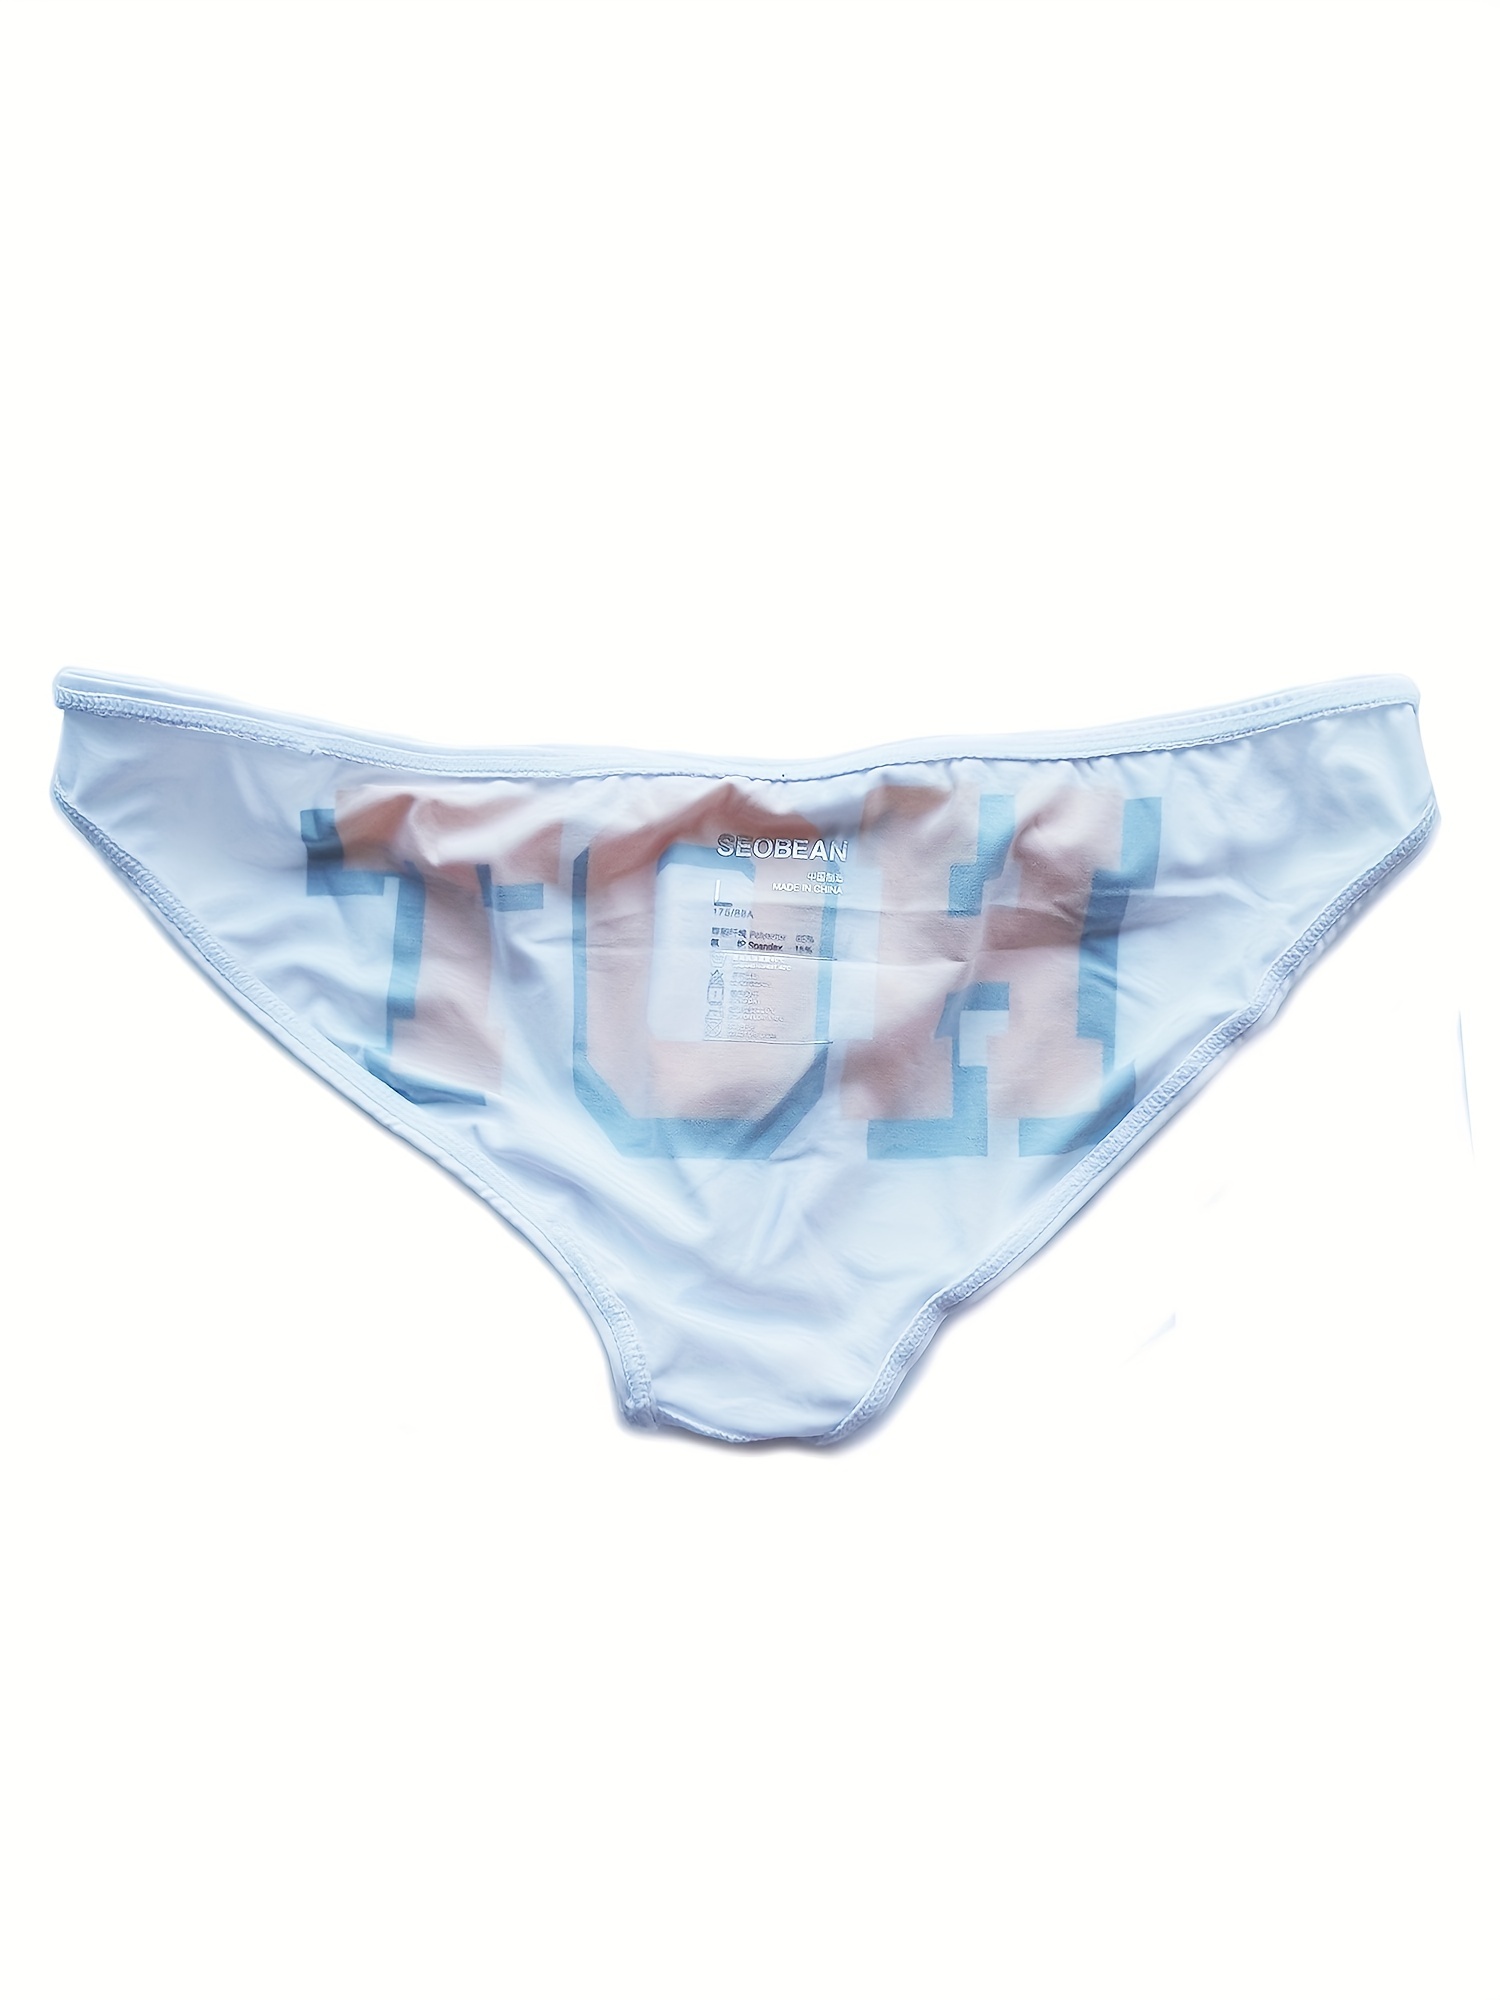 Mens Ice Silk U Pouch Underwear Cotton Briefs Mens Set, Sexy Low Rise  Summer Lingerie In Sea Satin From Xmlongbida, $13.93